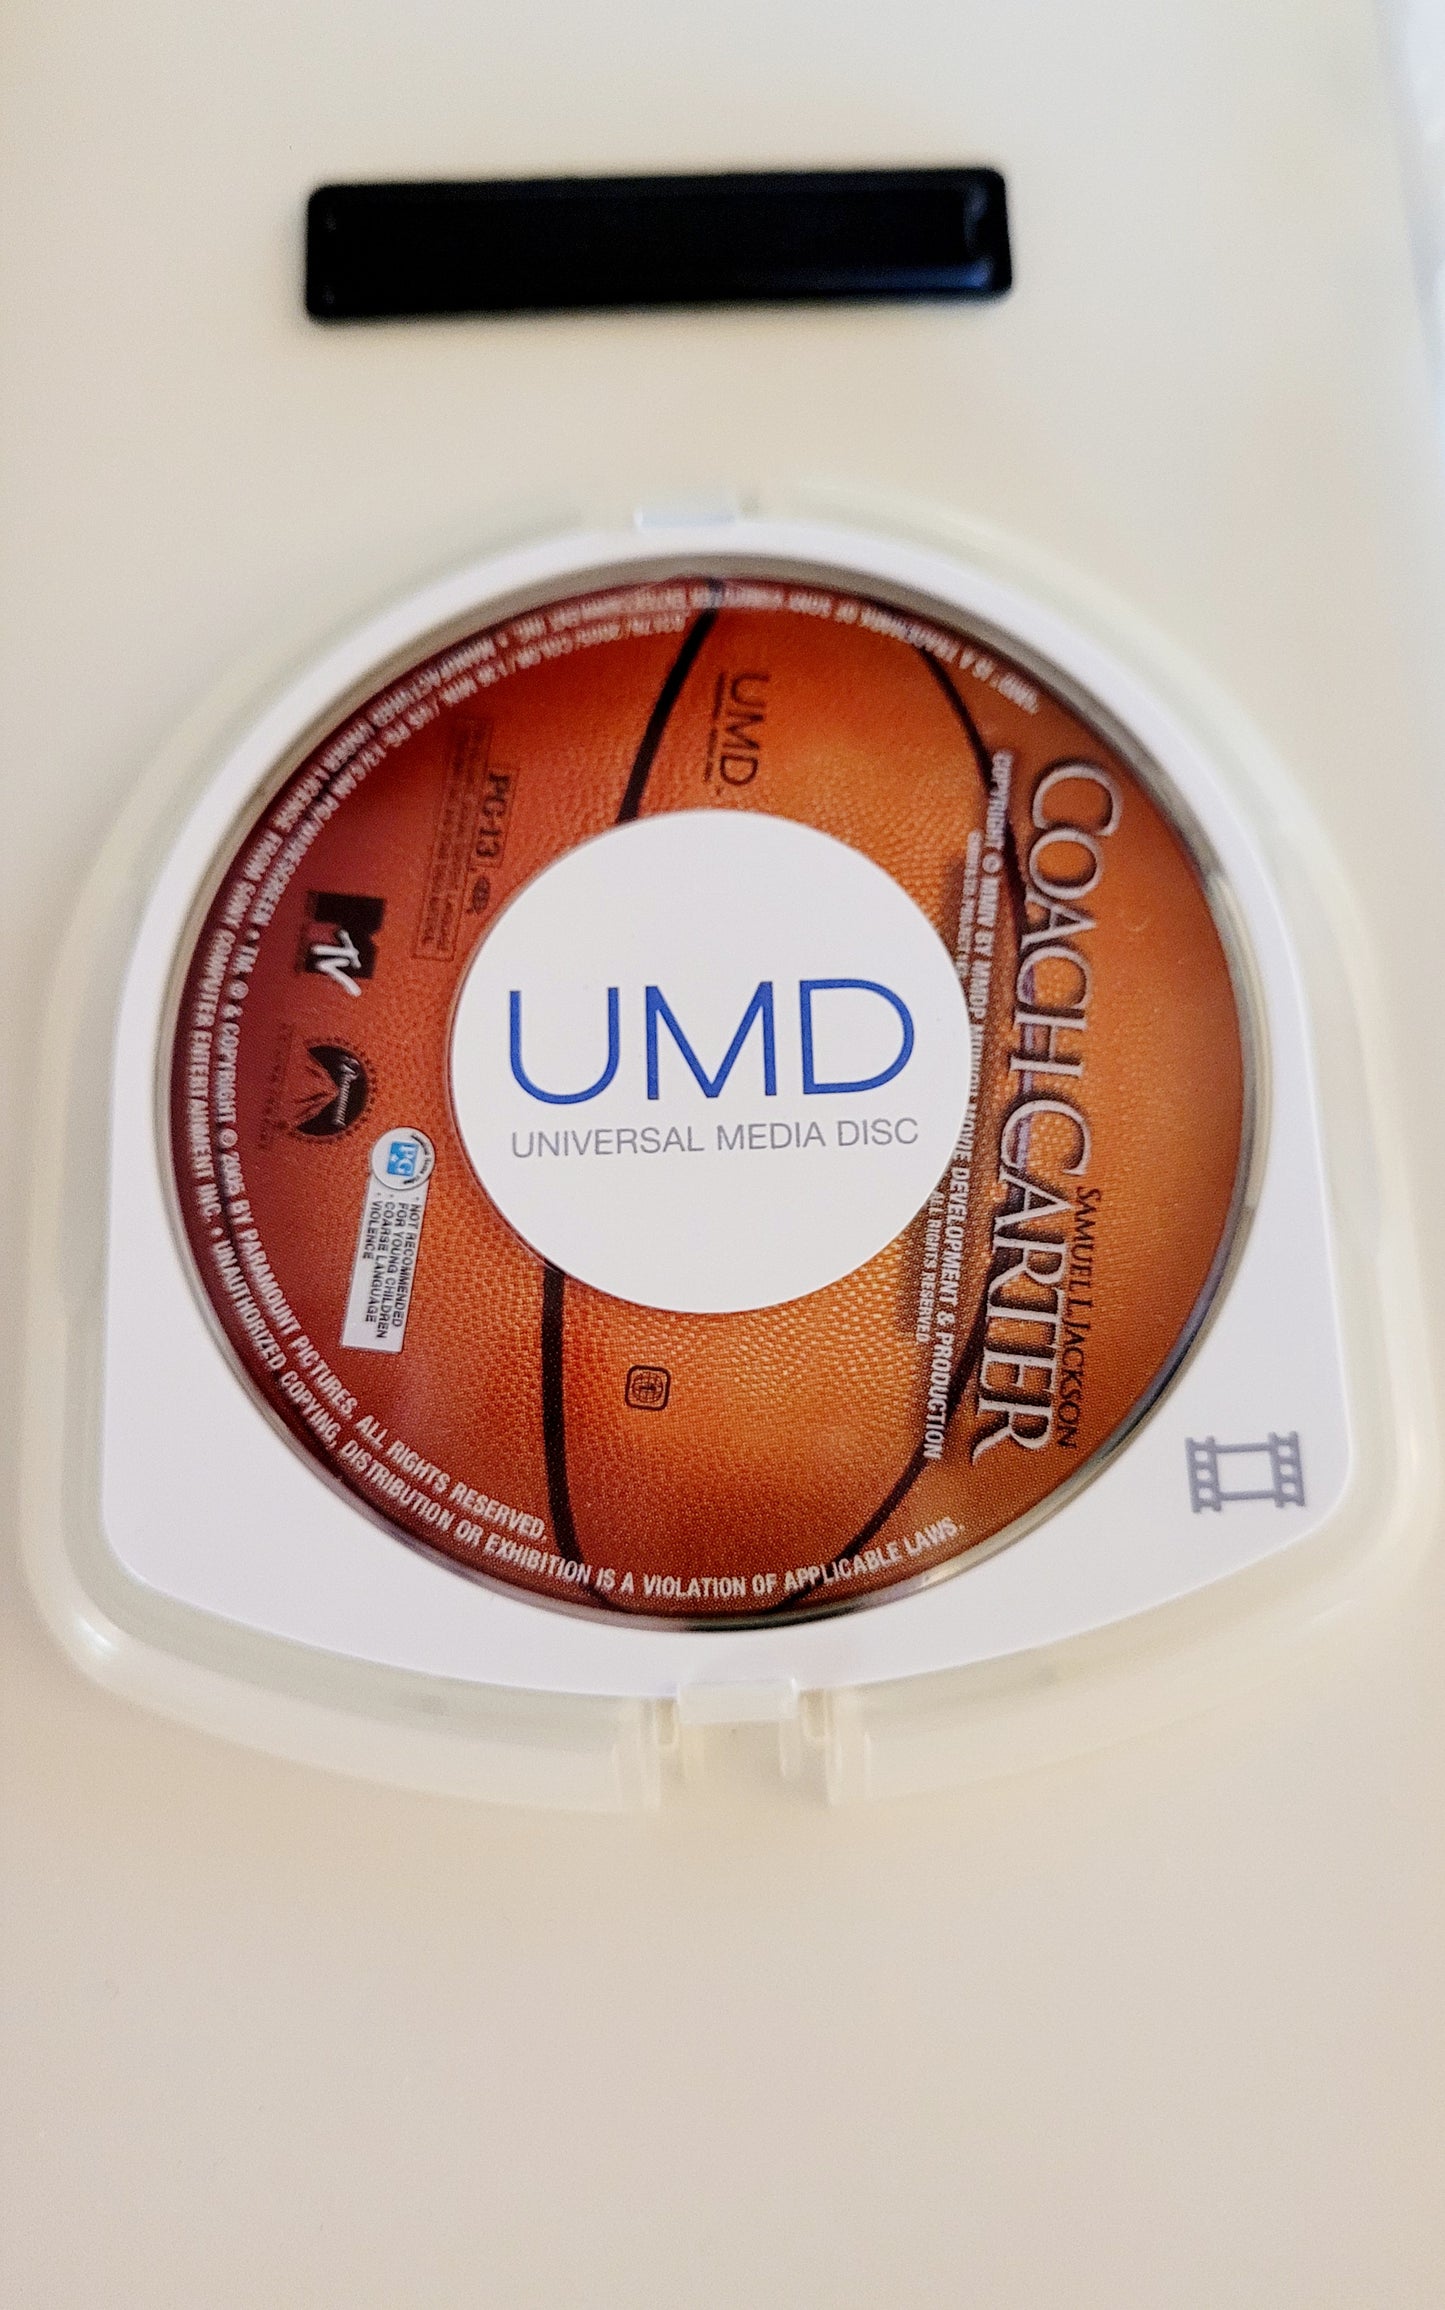 Coach Carter - UMD Video for PSP